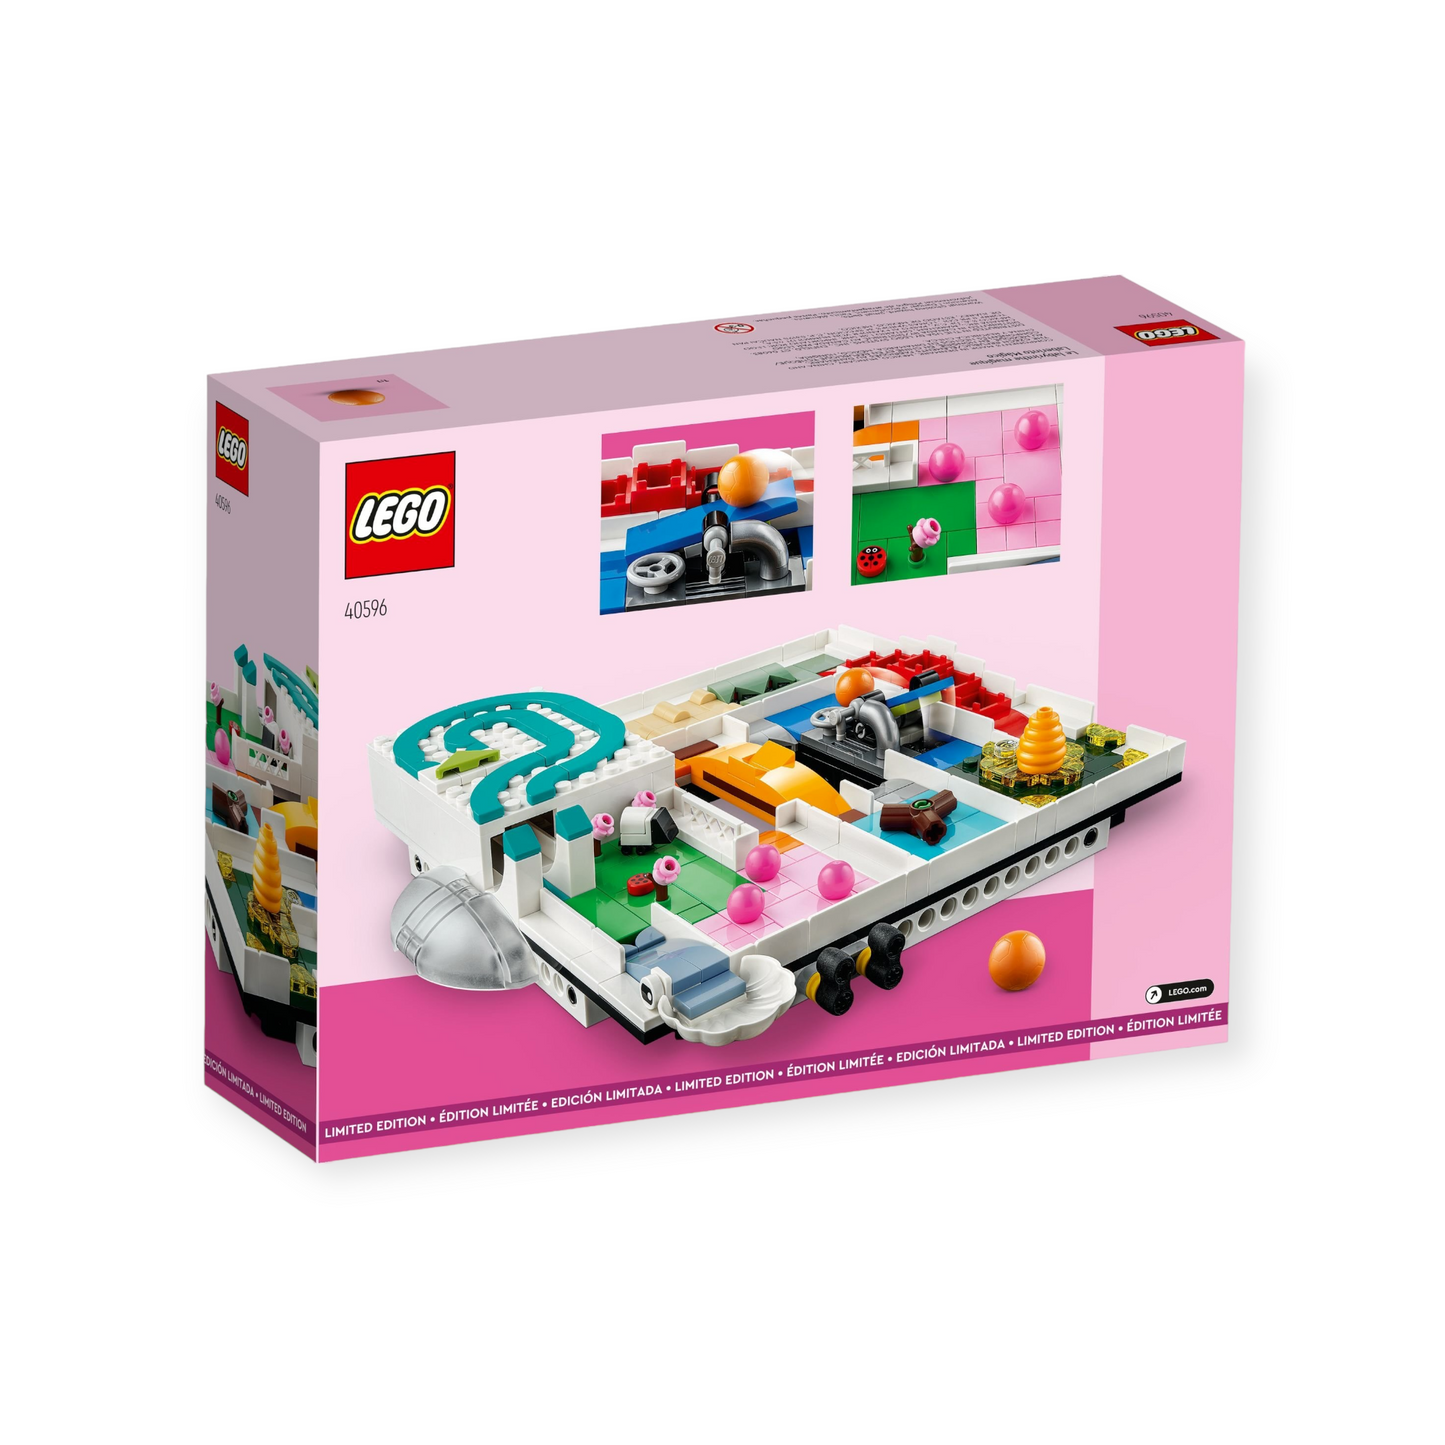 LEGO 40596 - Magisches Labyrinth